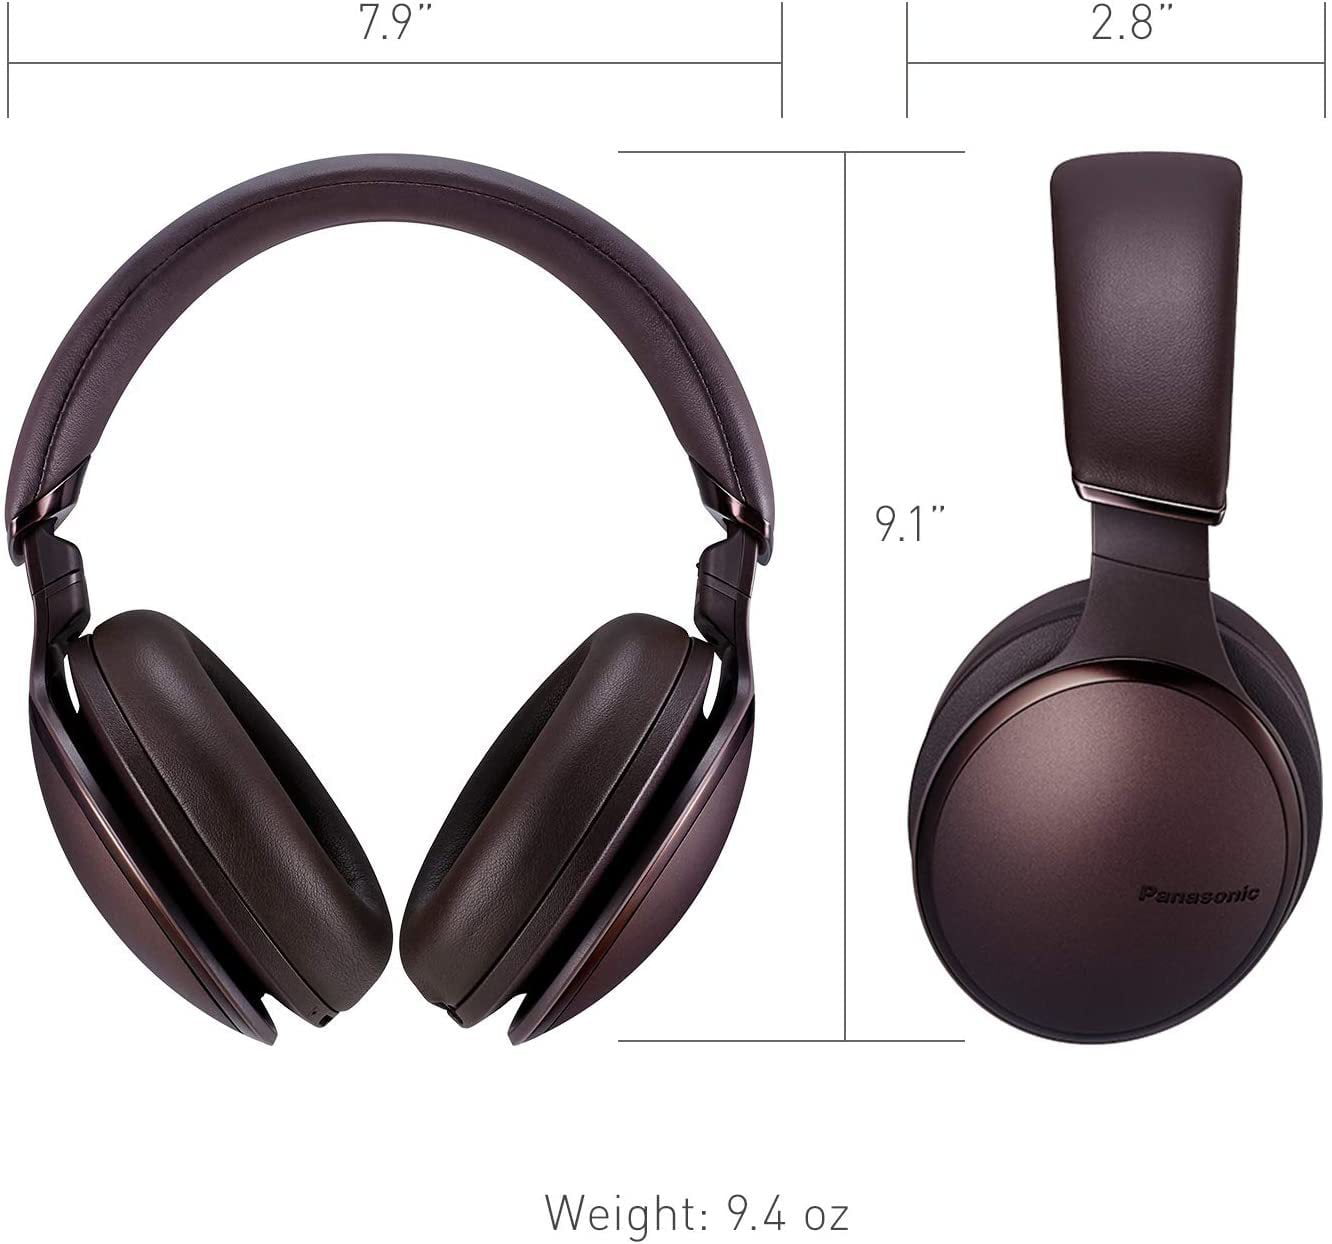 Panasonic RP-HD805N Noise-Canceling Wireless Over-Ear Headphones (Brown)